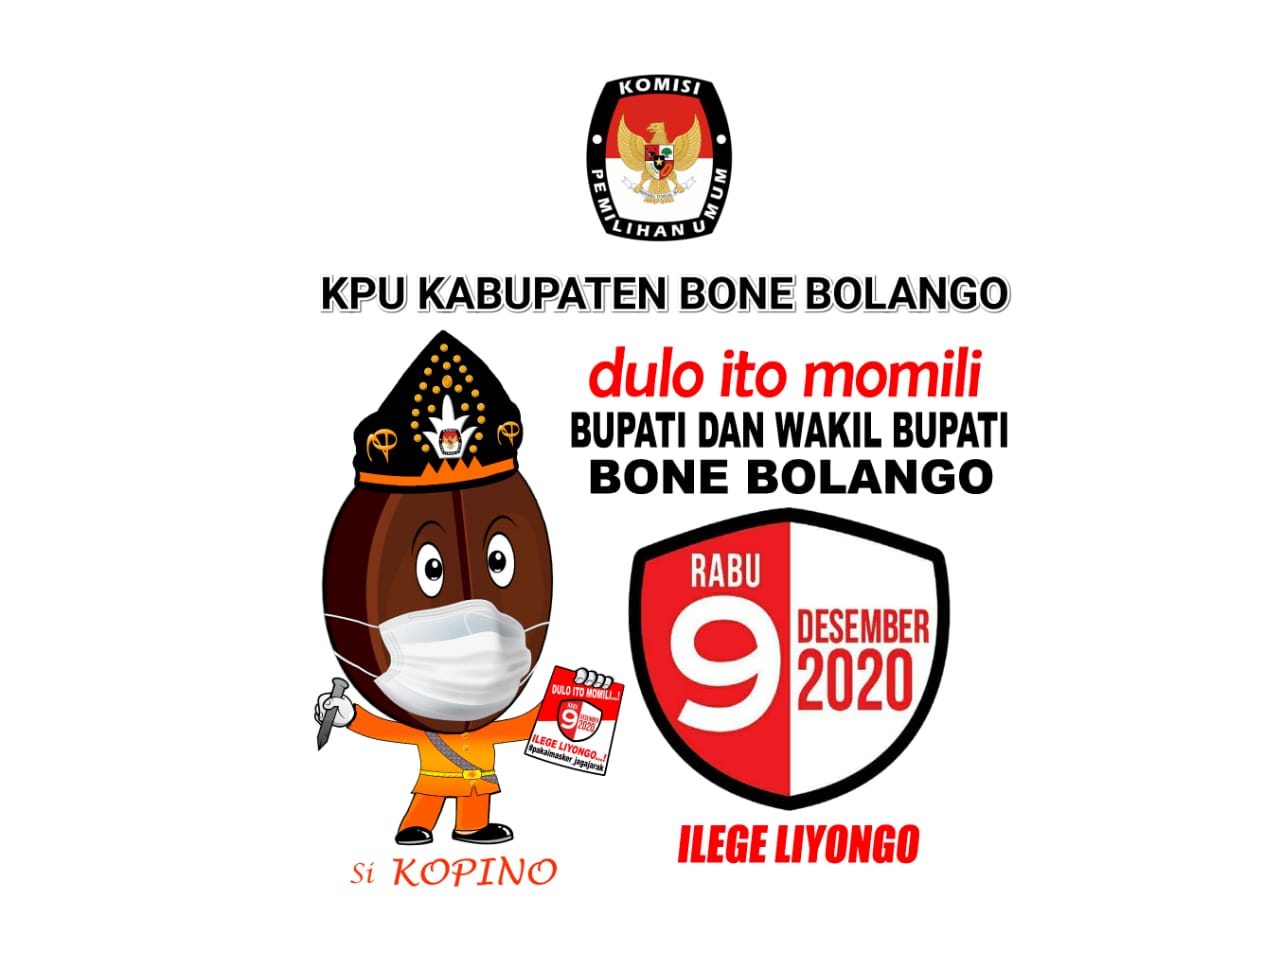 KPU Bone Bolango